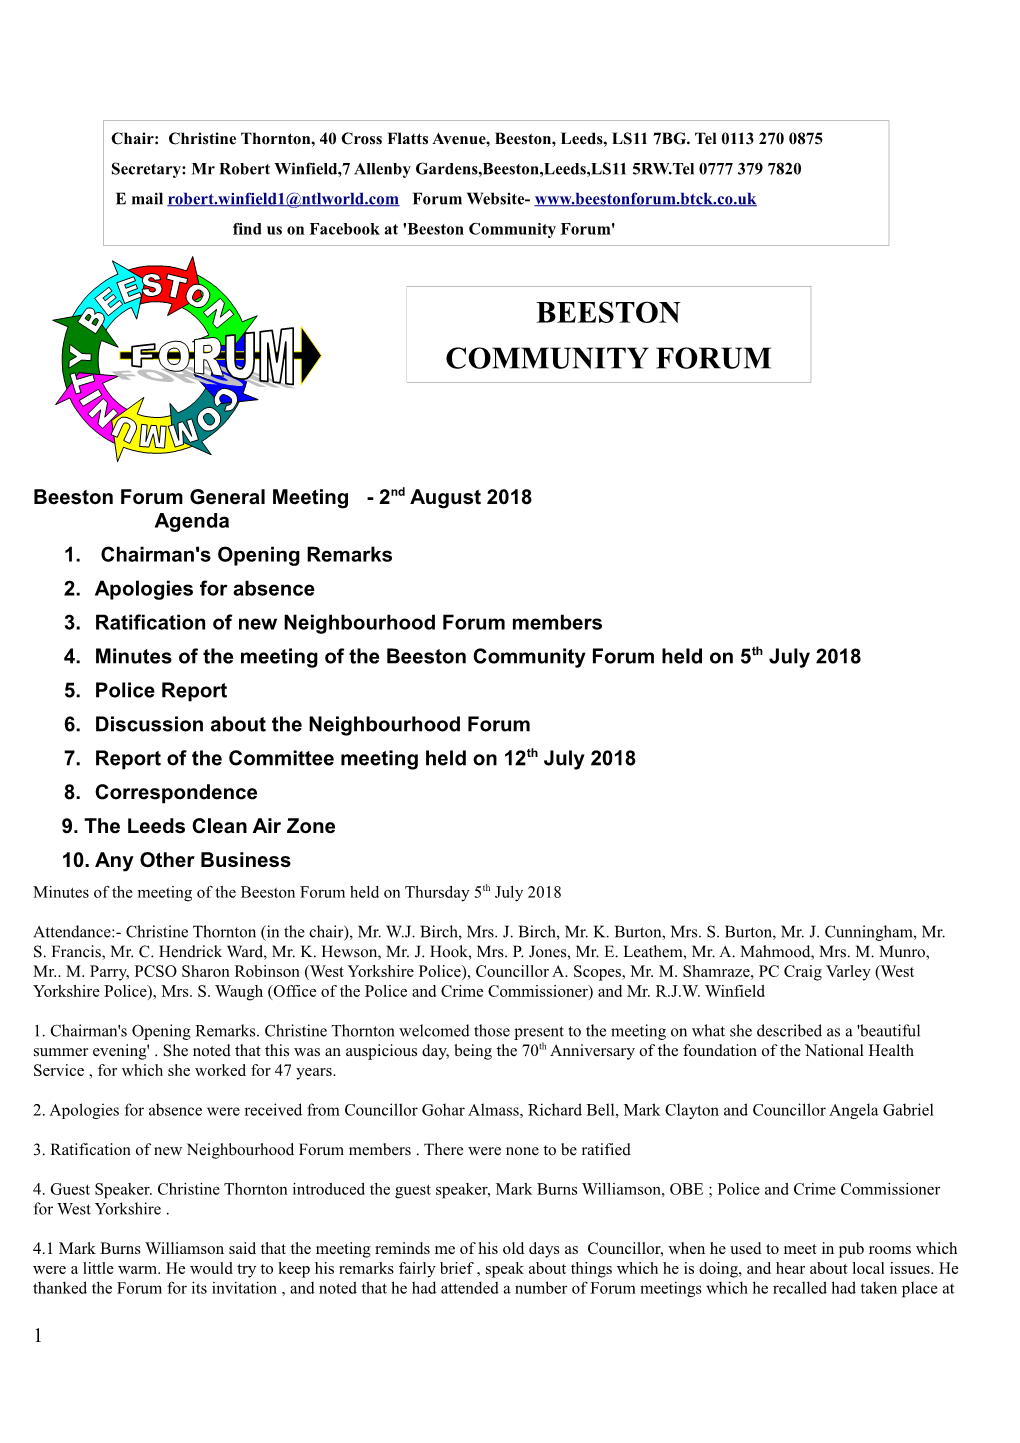 Beeston Community Forum'